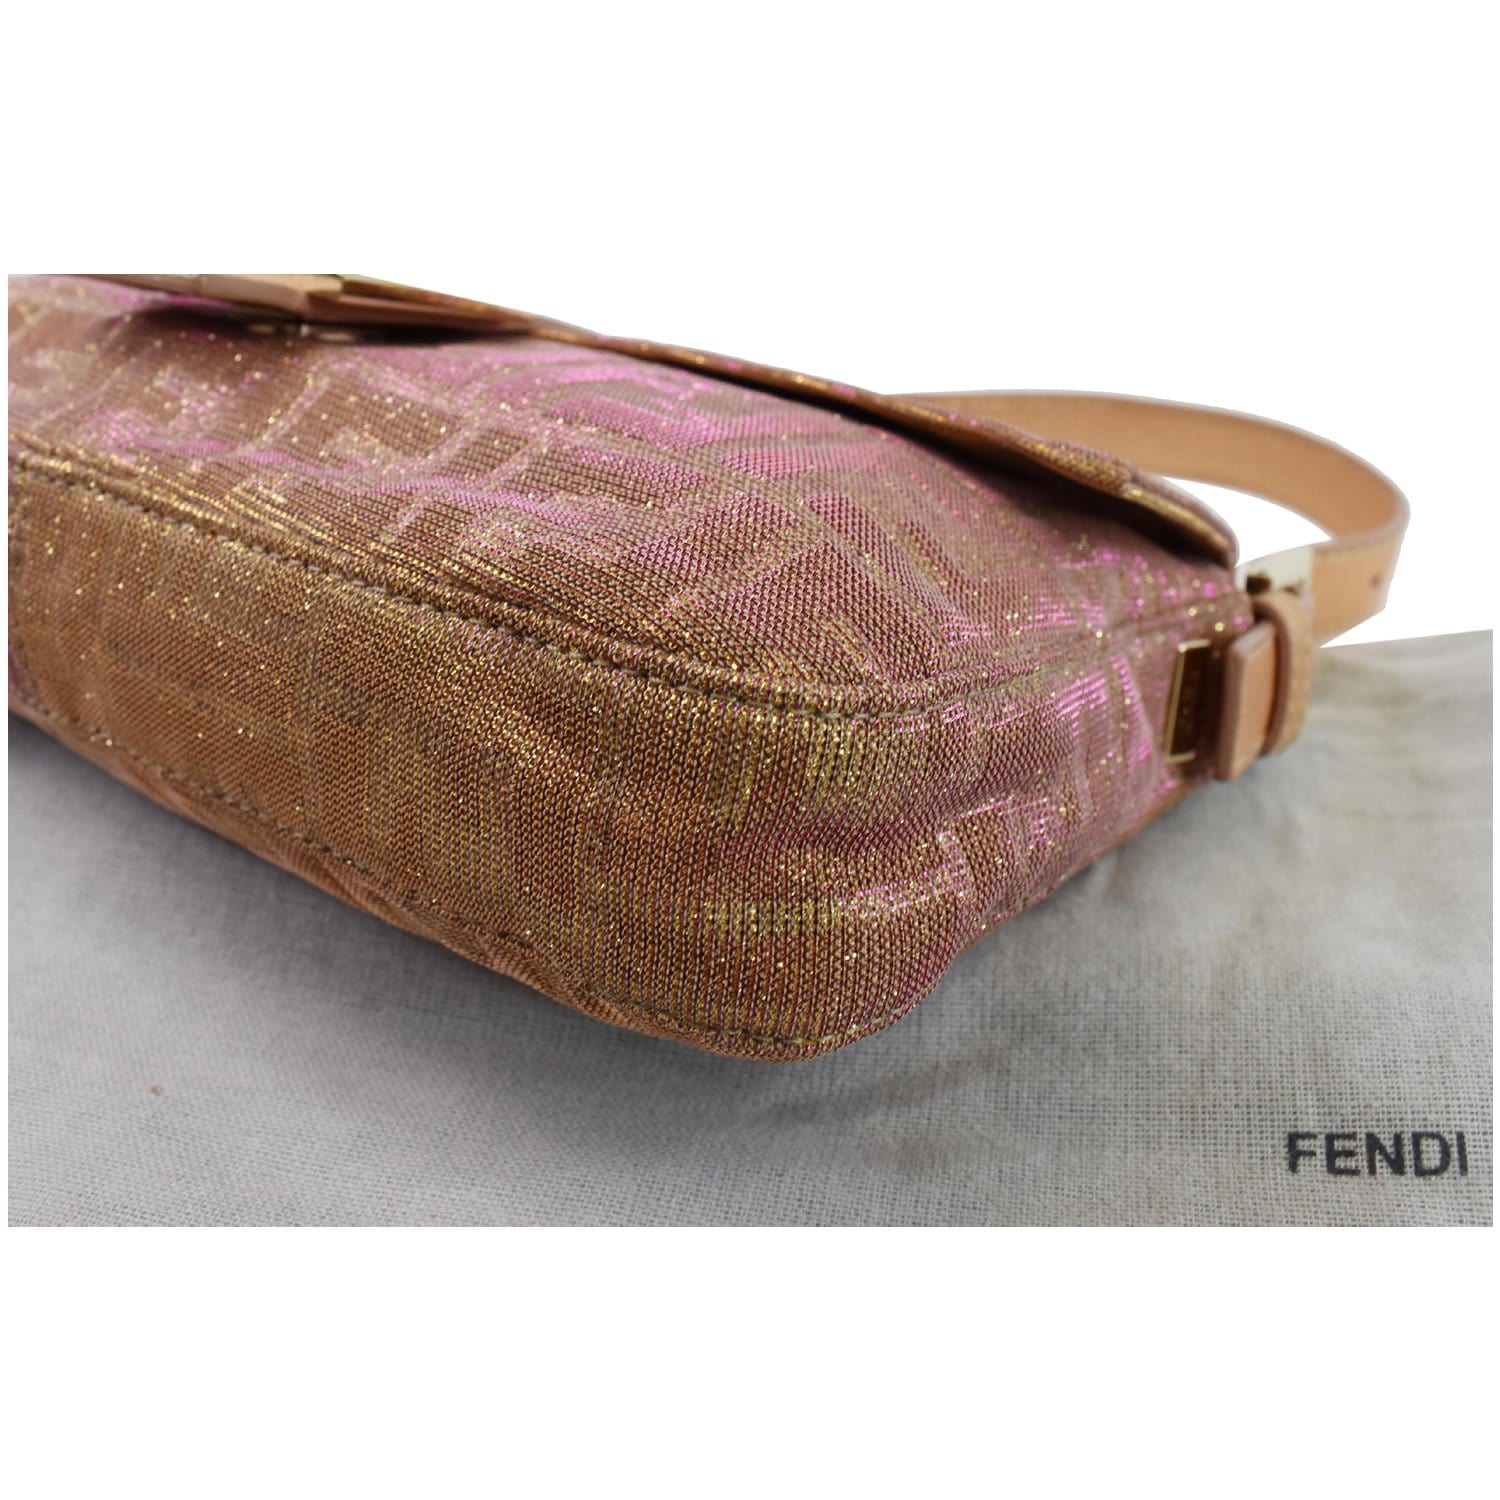 Fendi brown monogram canvas Baguette bag - Second Hand / Used